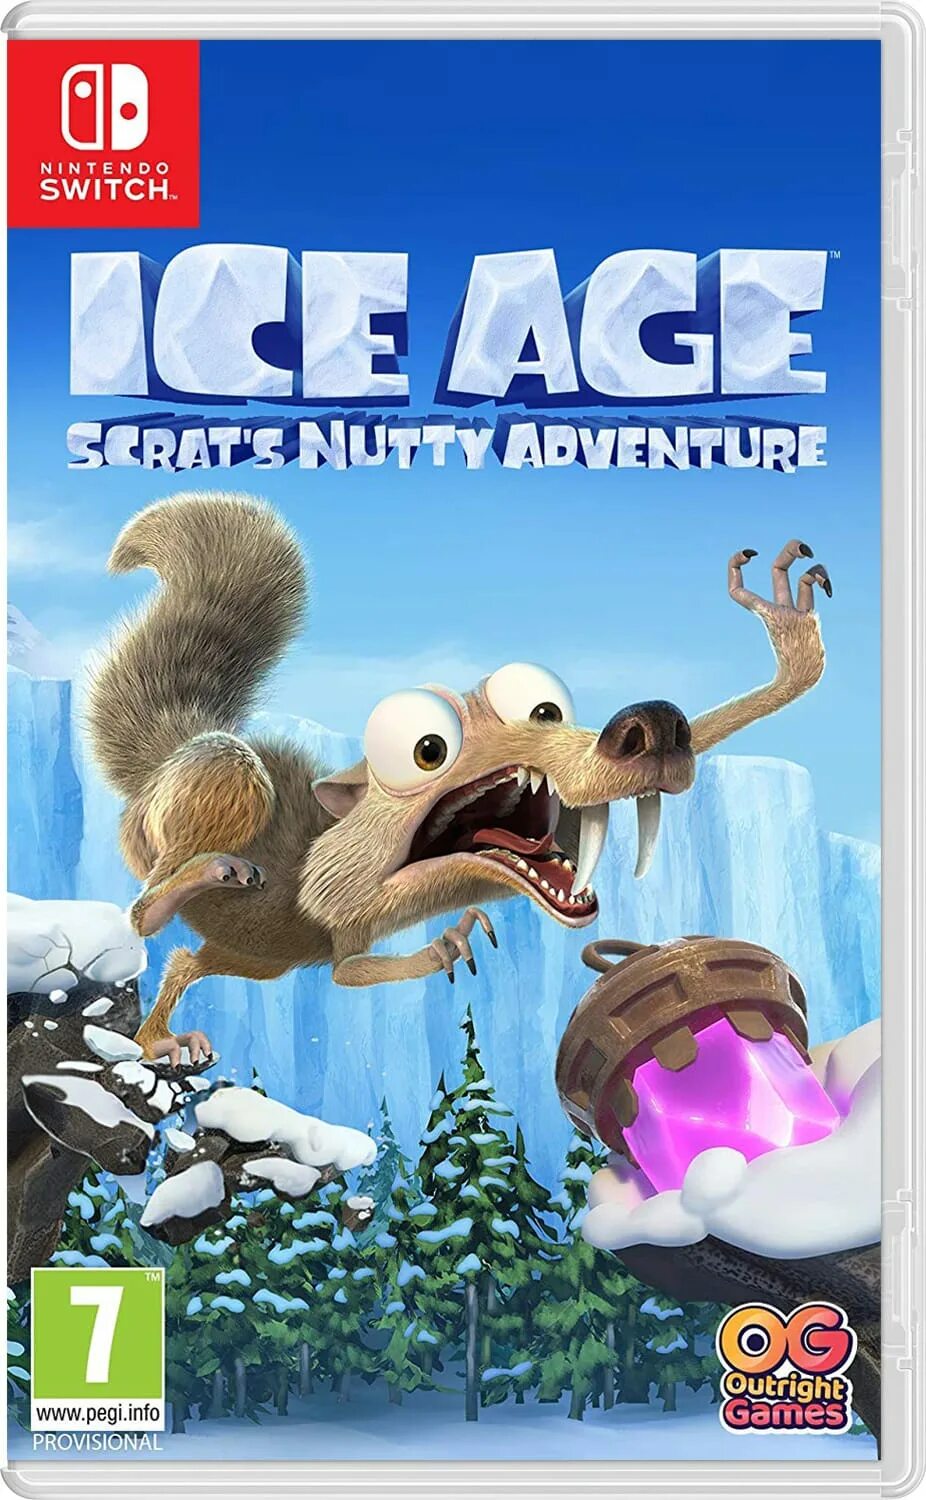 Ice age scrats nutty. Ice age на Нинтендо свитч. Ледниковый период сумасшедшее приключение Скрэта (Nintendo Switch). Игра Ледниковый период Scrats Nutty. Ice age Nutty Adventure.